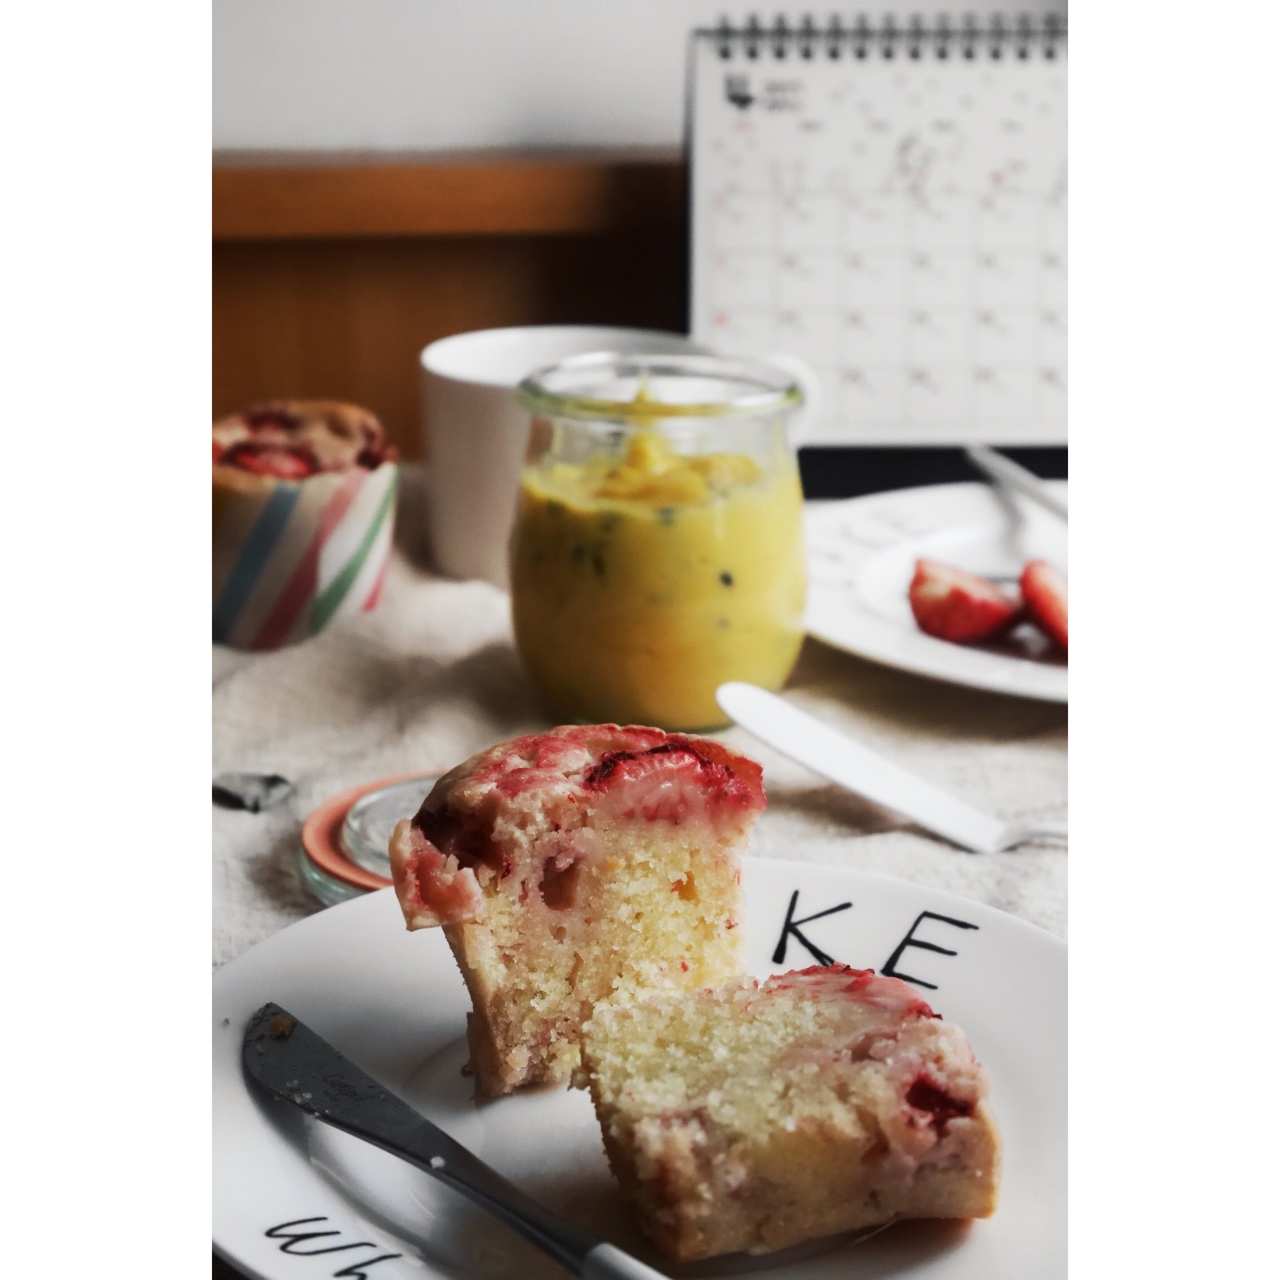 鲜草莓奶油酥饼马芬<Strawberry Shortcake Muffin>